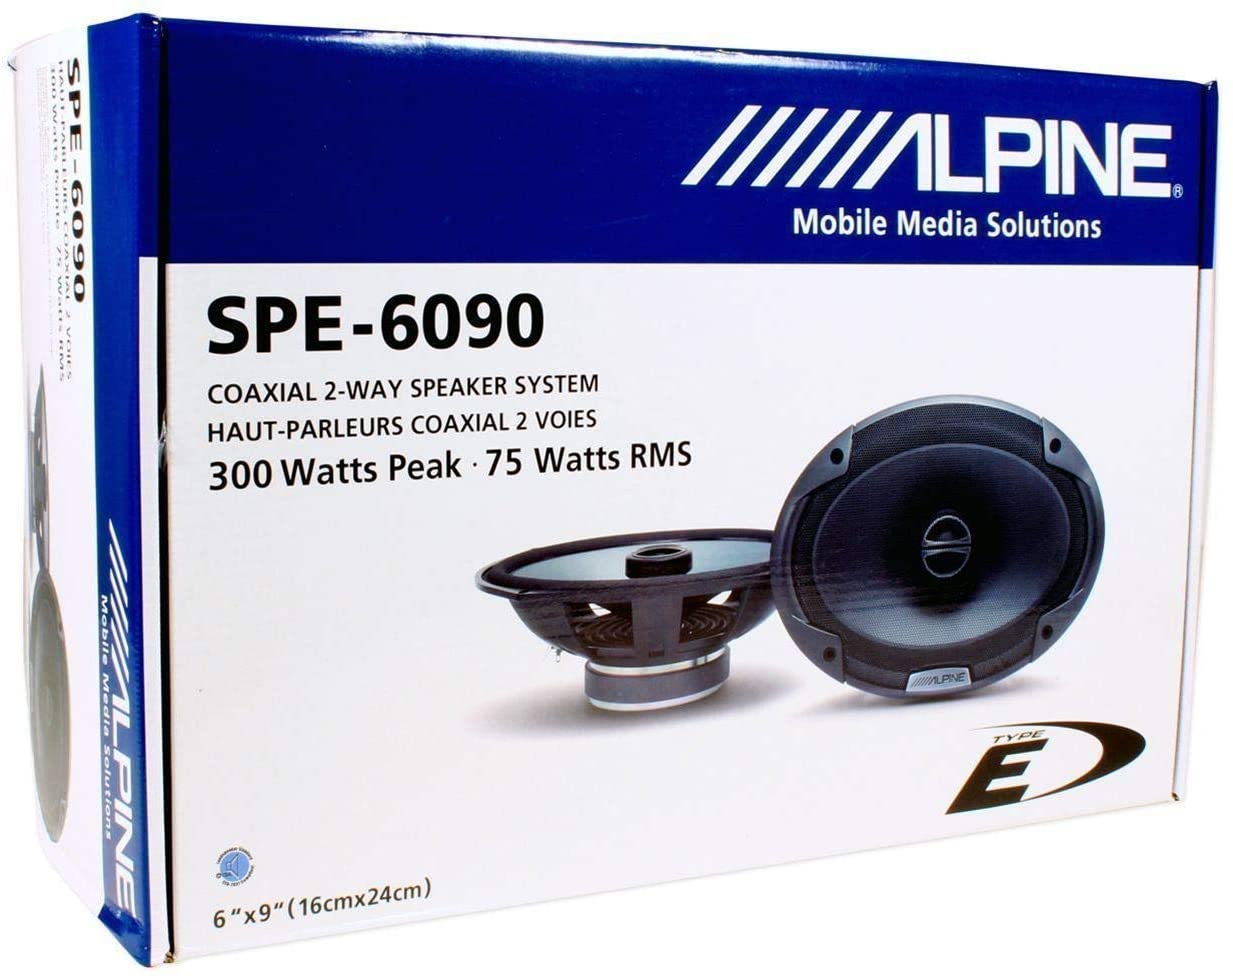 2 Alpine SPE-6090 6" x 9" 2 Way Car Stereo Speakers 600 Watts Bundle with 2 Absolute 6x9" Car Audio 6x9" Wedge Sealed Speaker Box Enclosures